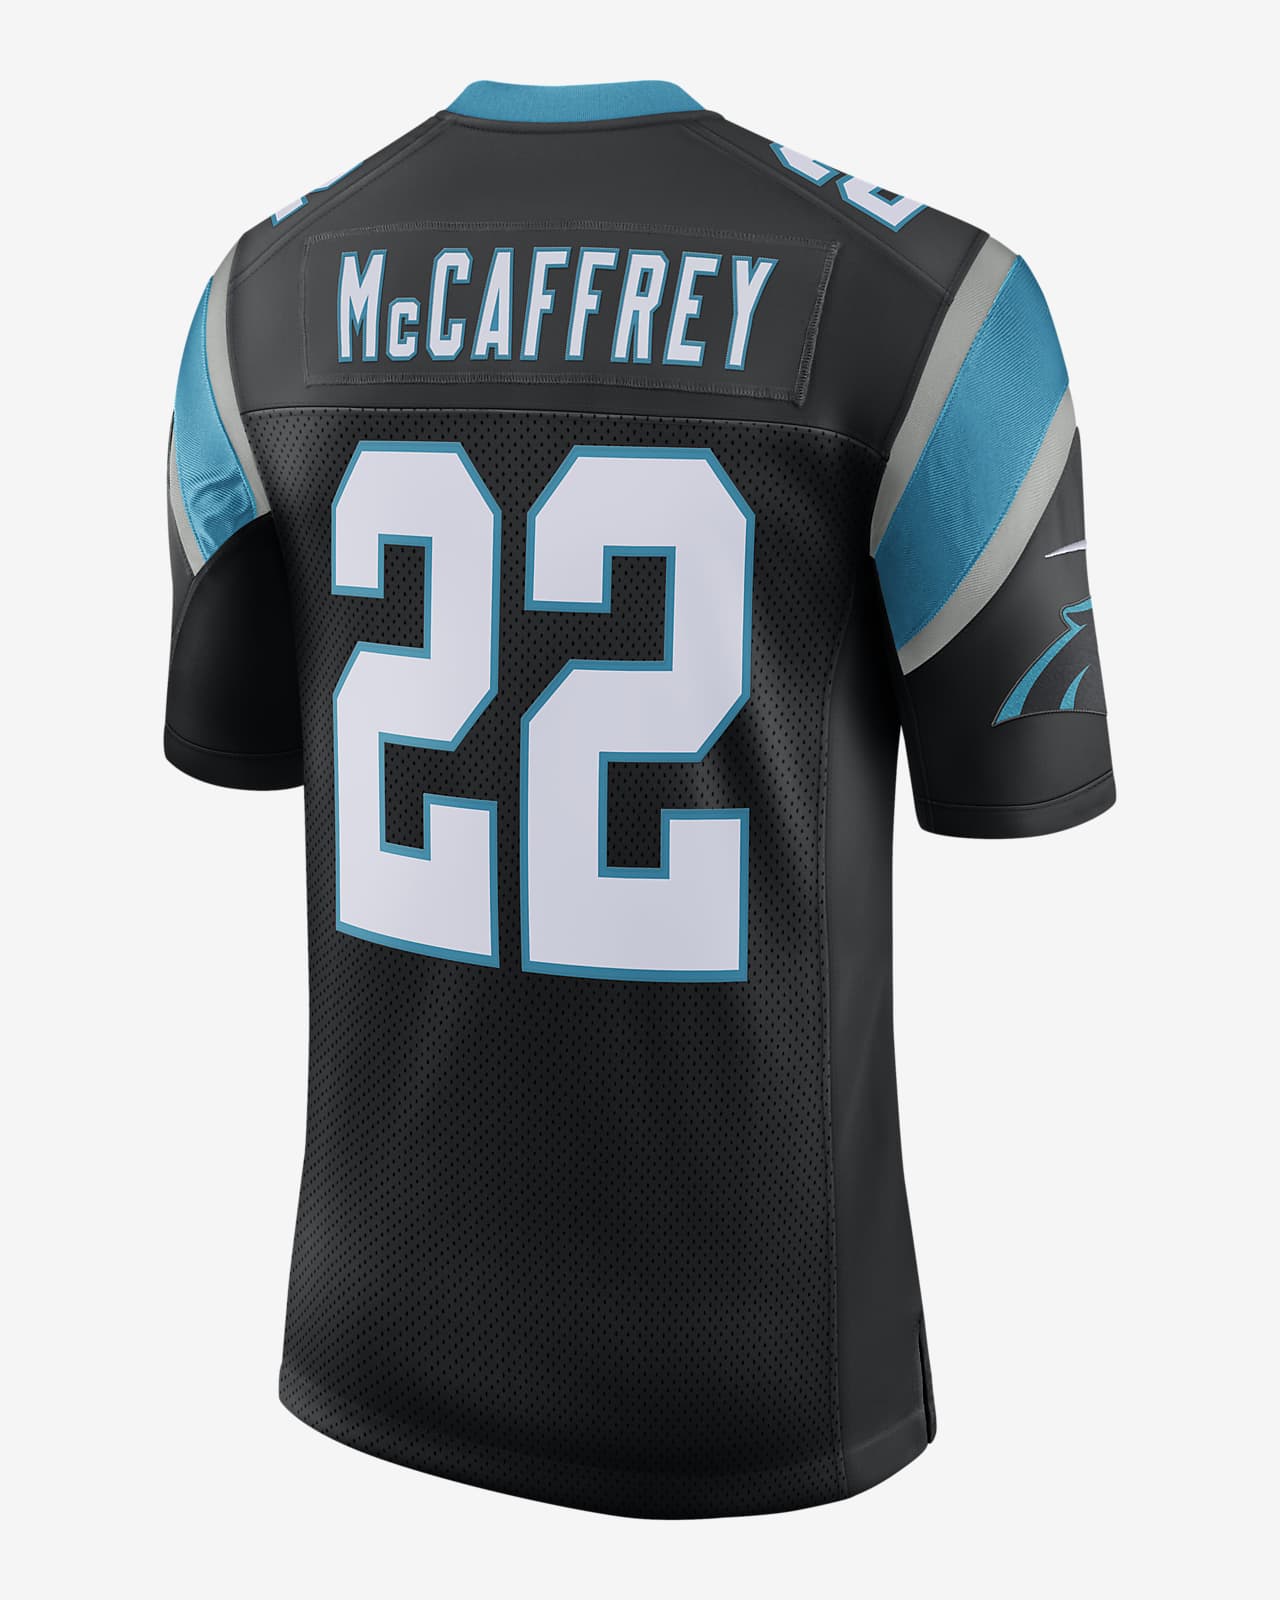 mccaffrey limited jersey